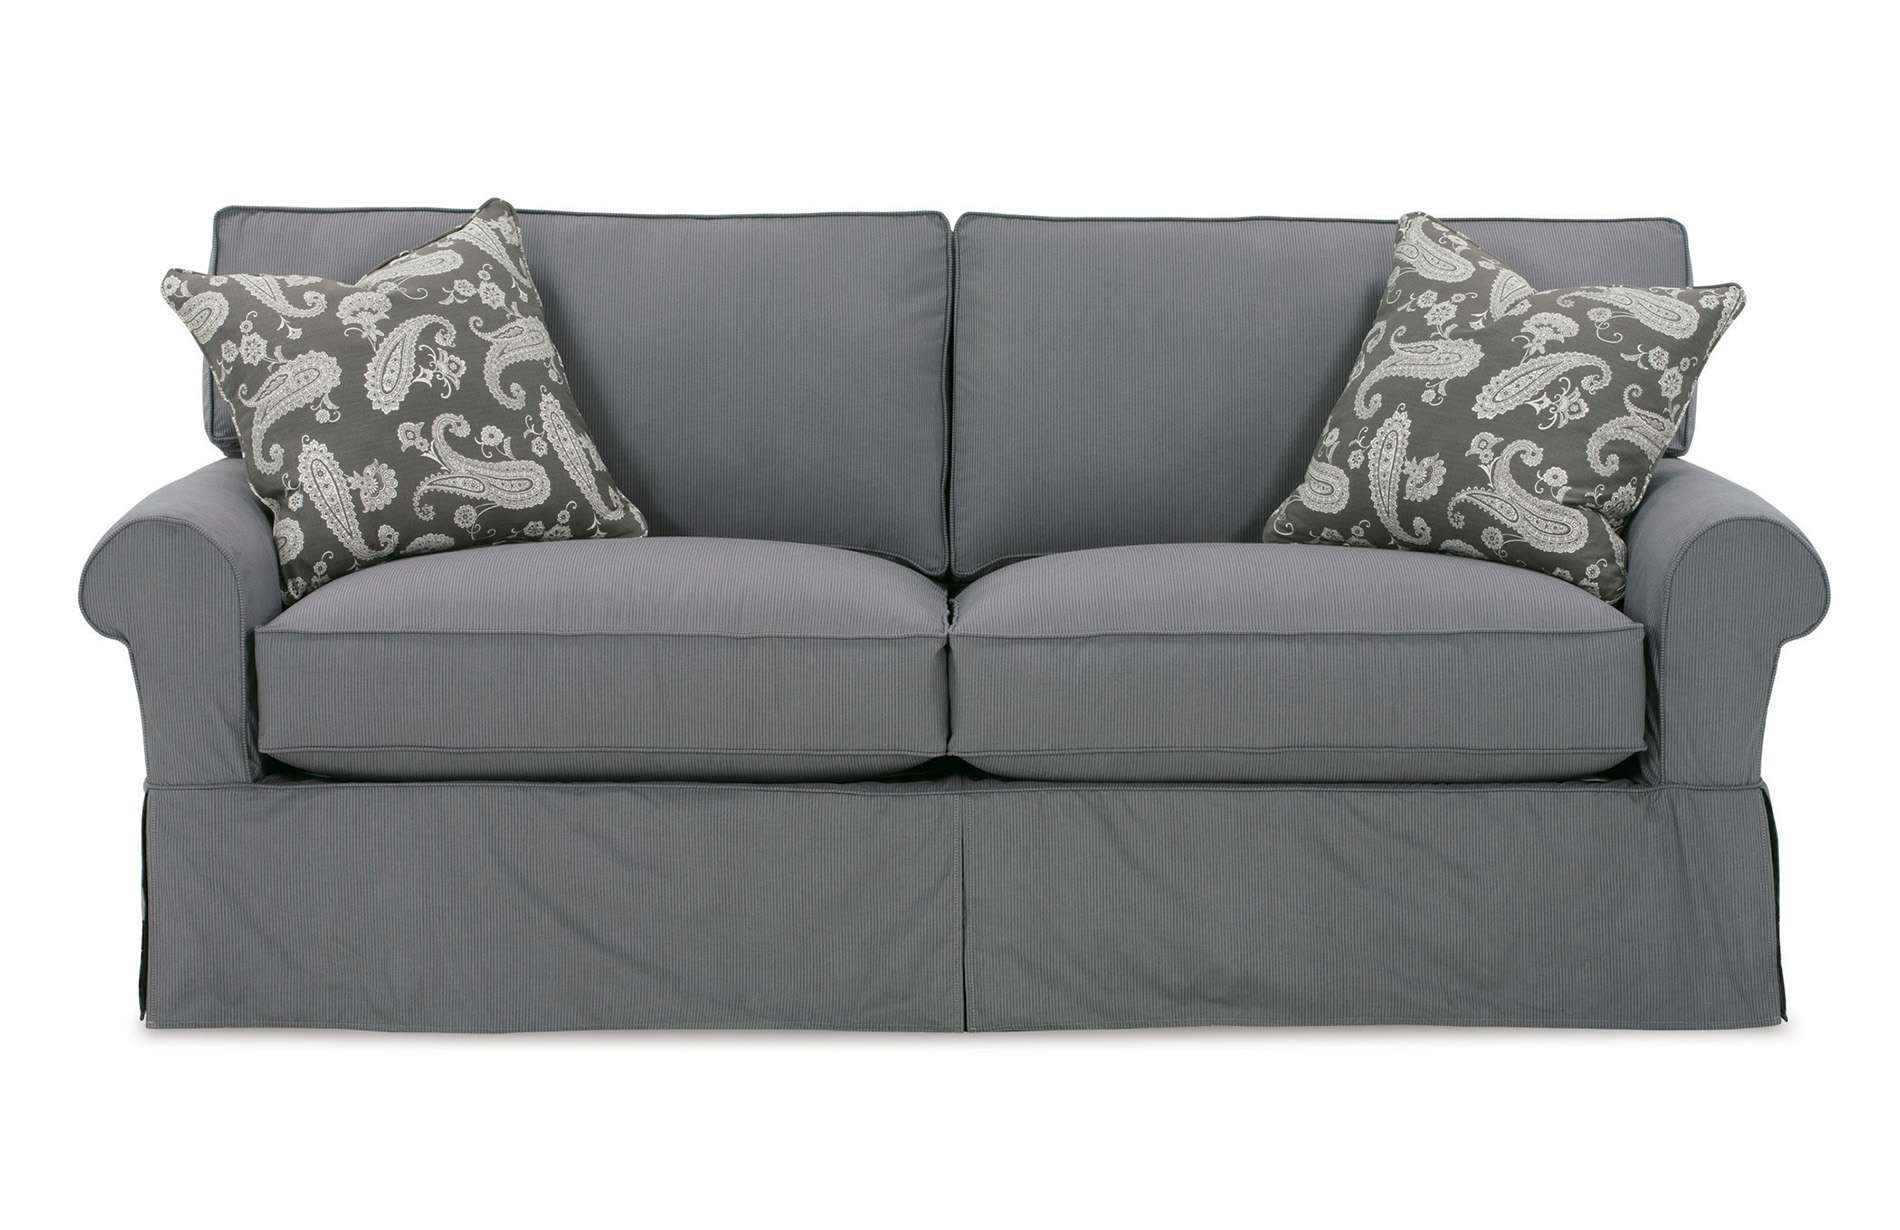 sofa bed covers australia